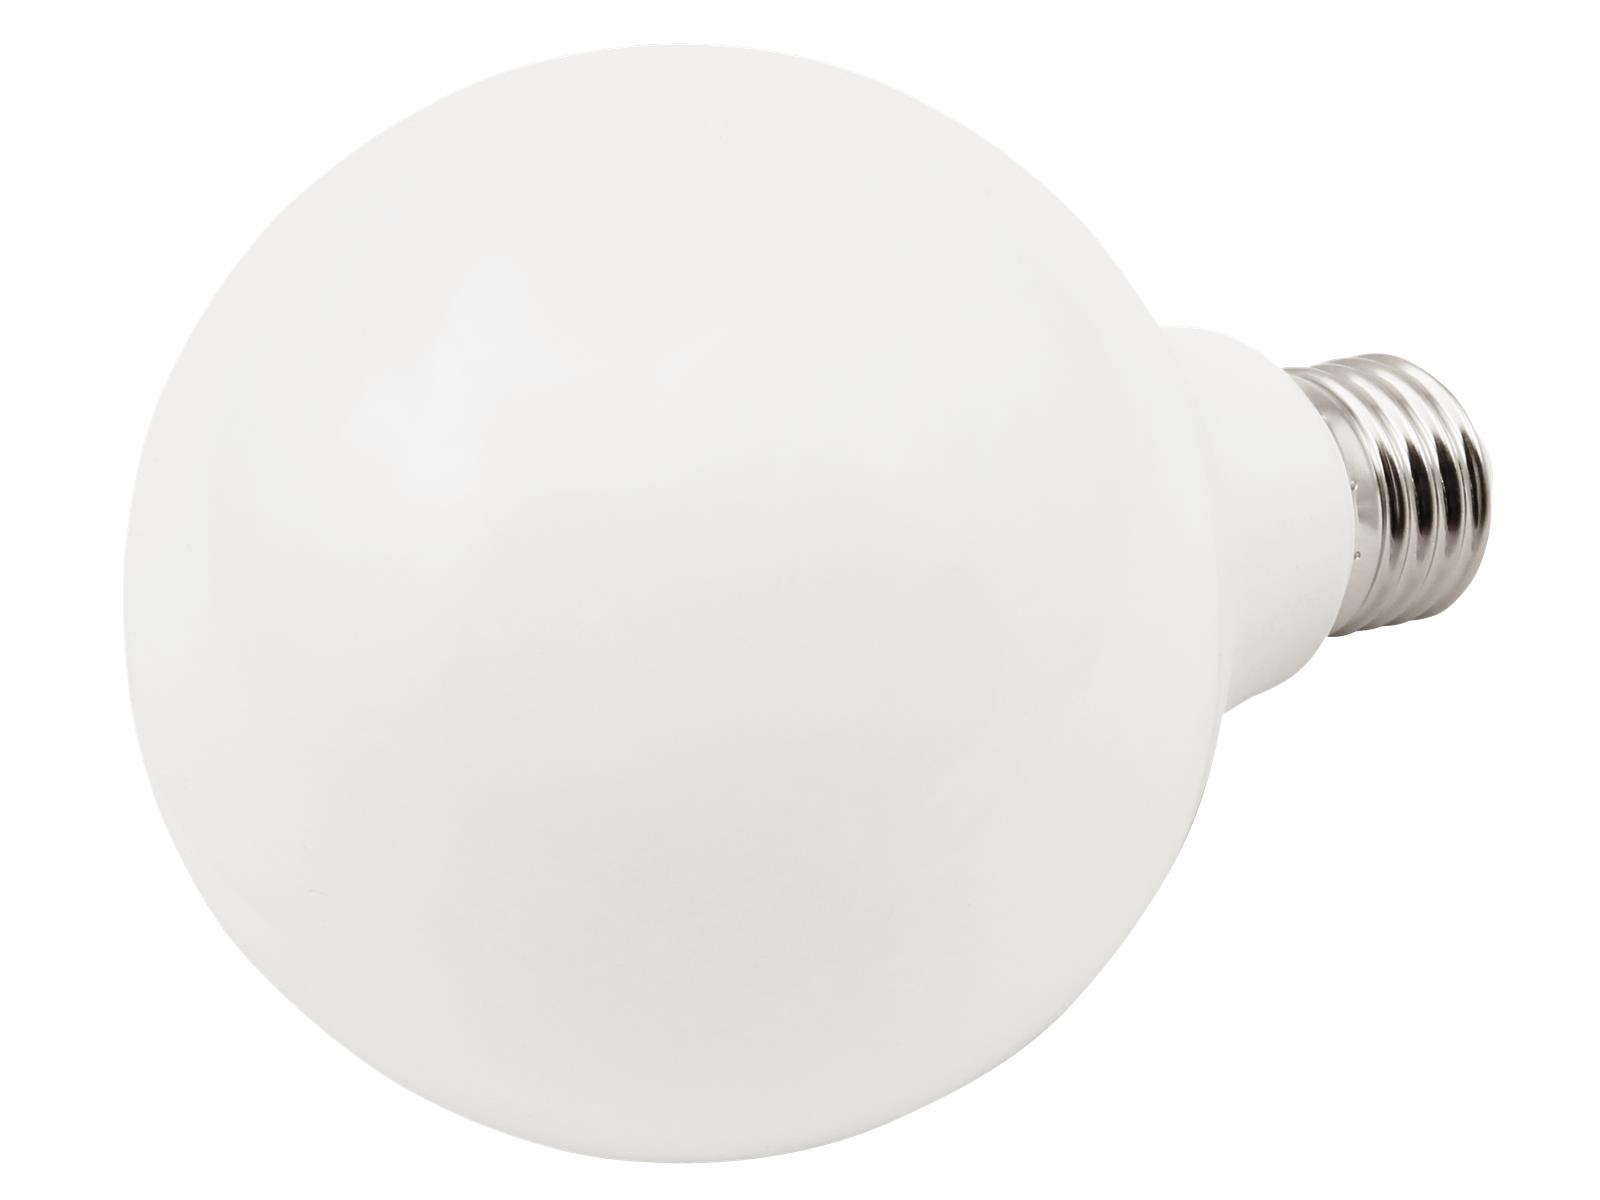 LED Globelampe McShine, E27, 12W, 1055lm, warmweiß